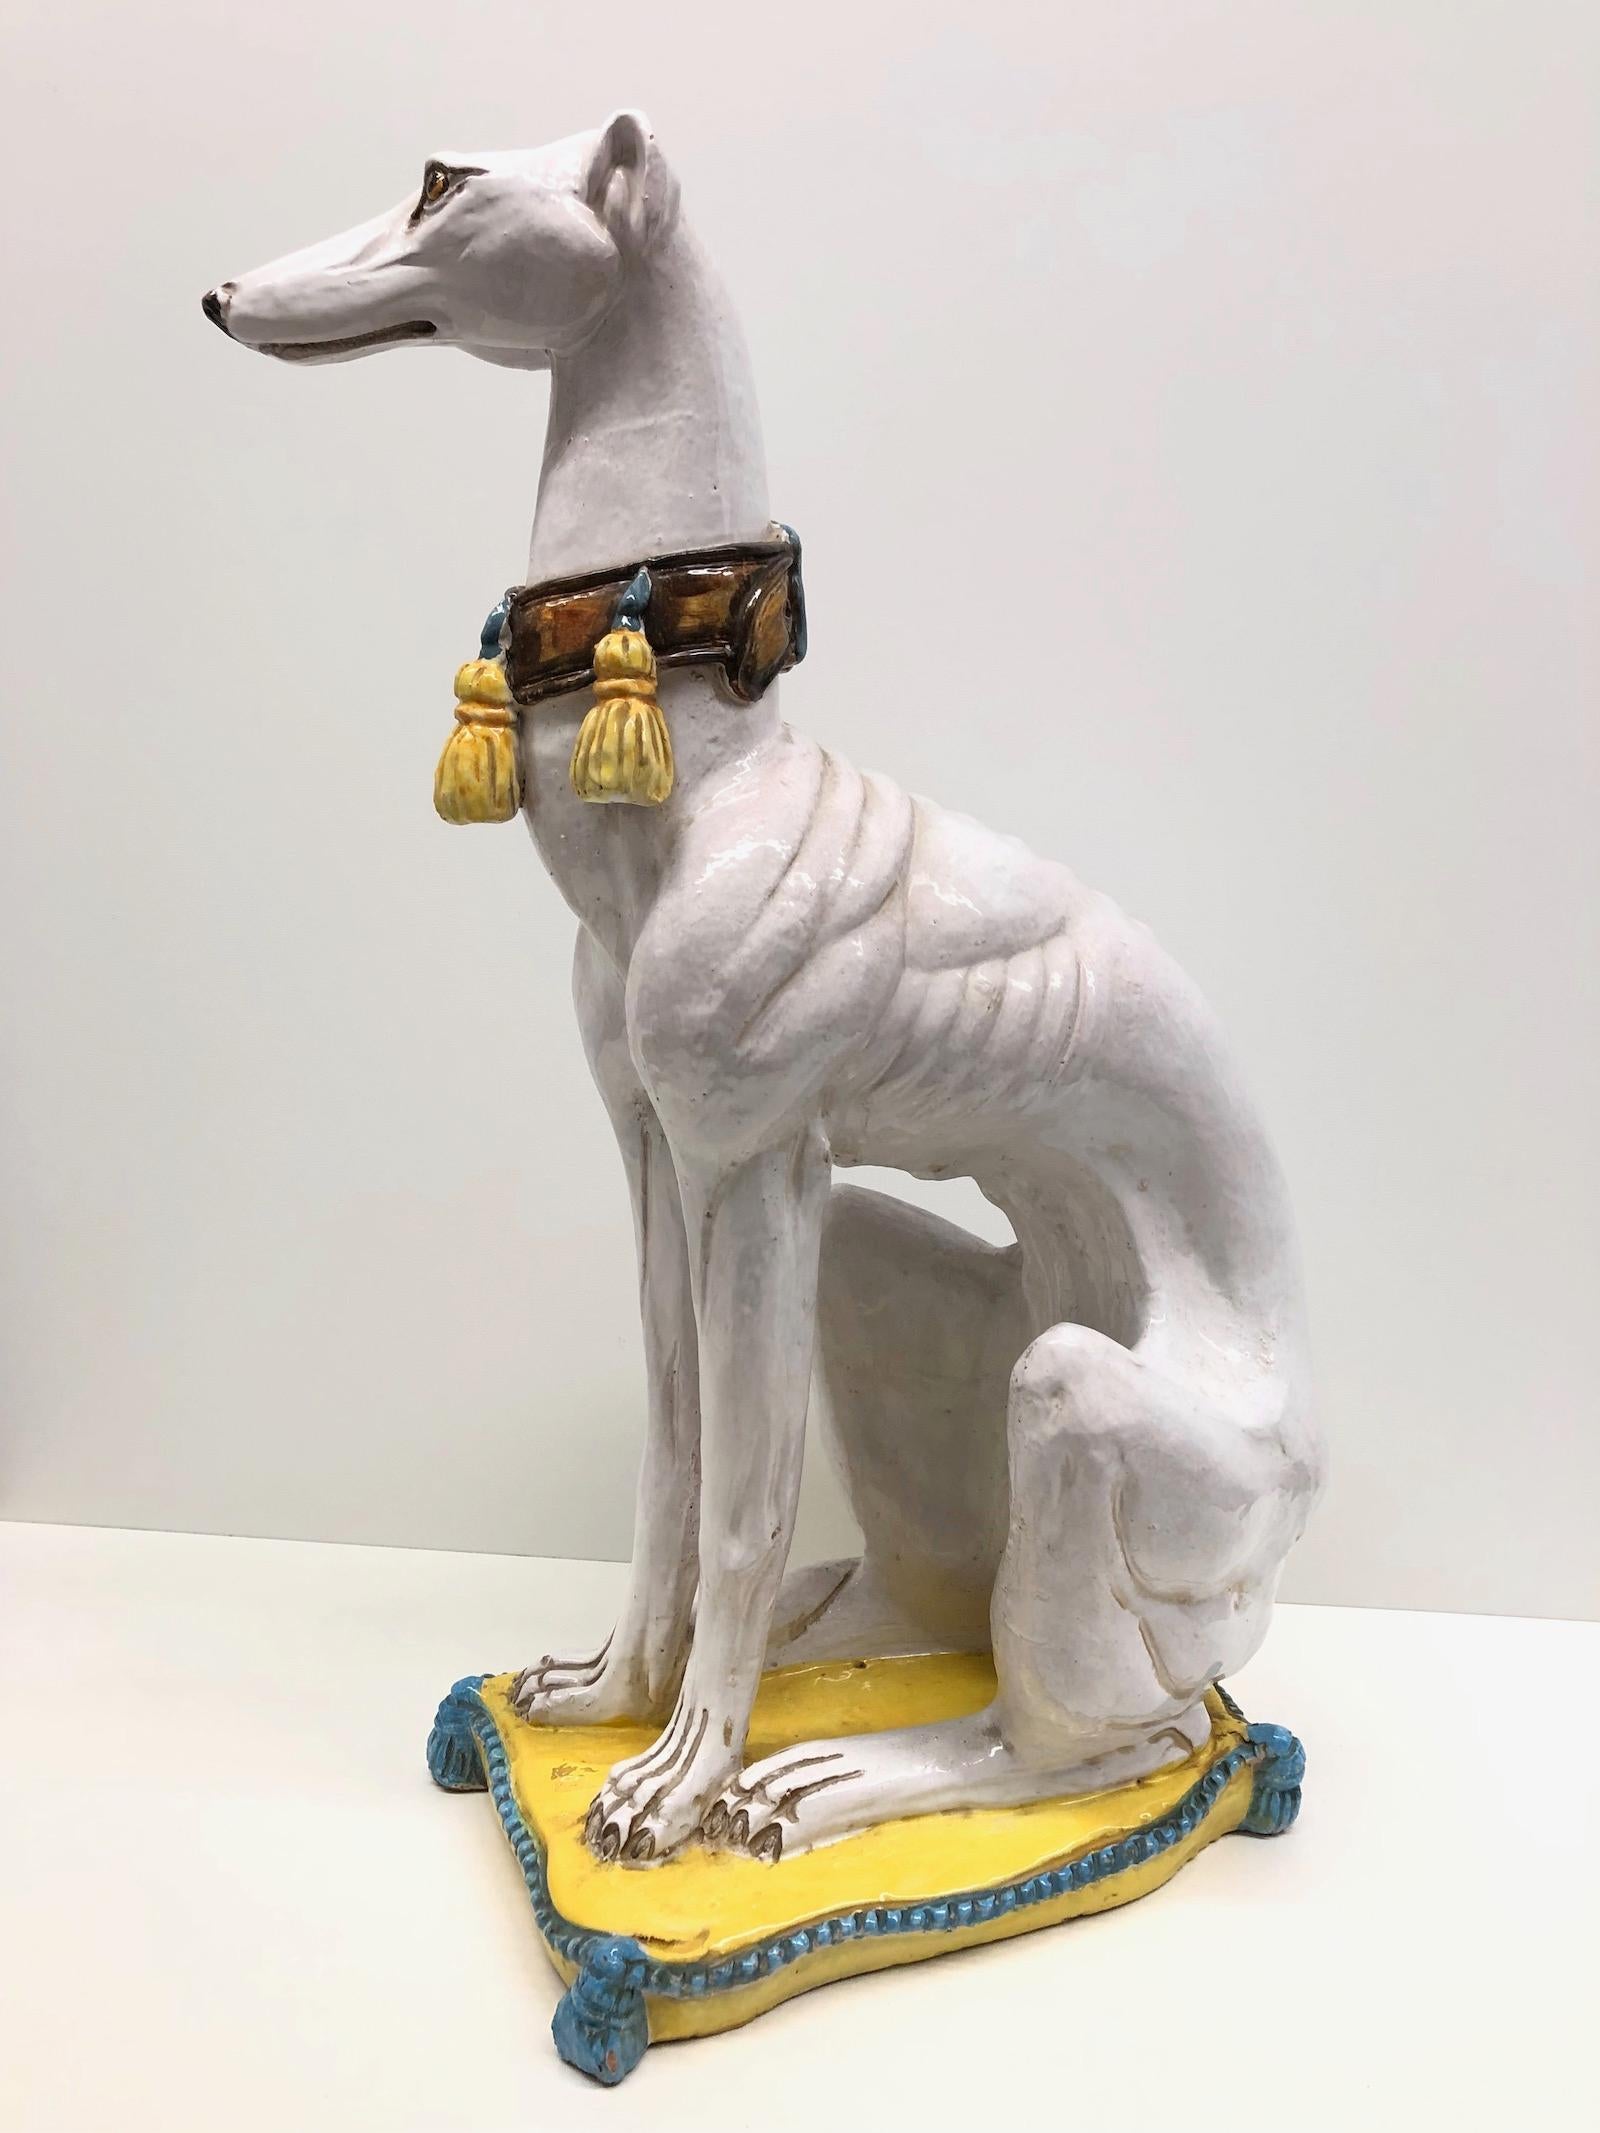 italian greyhound statue